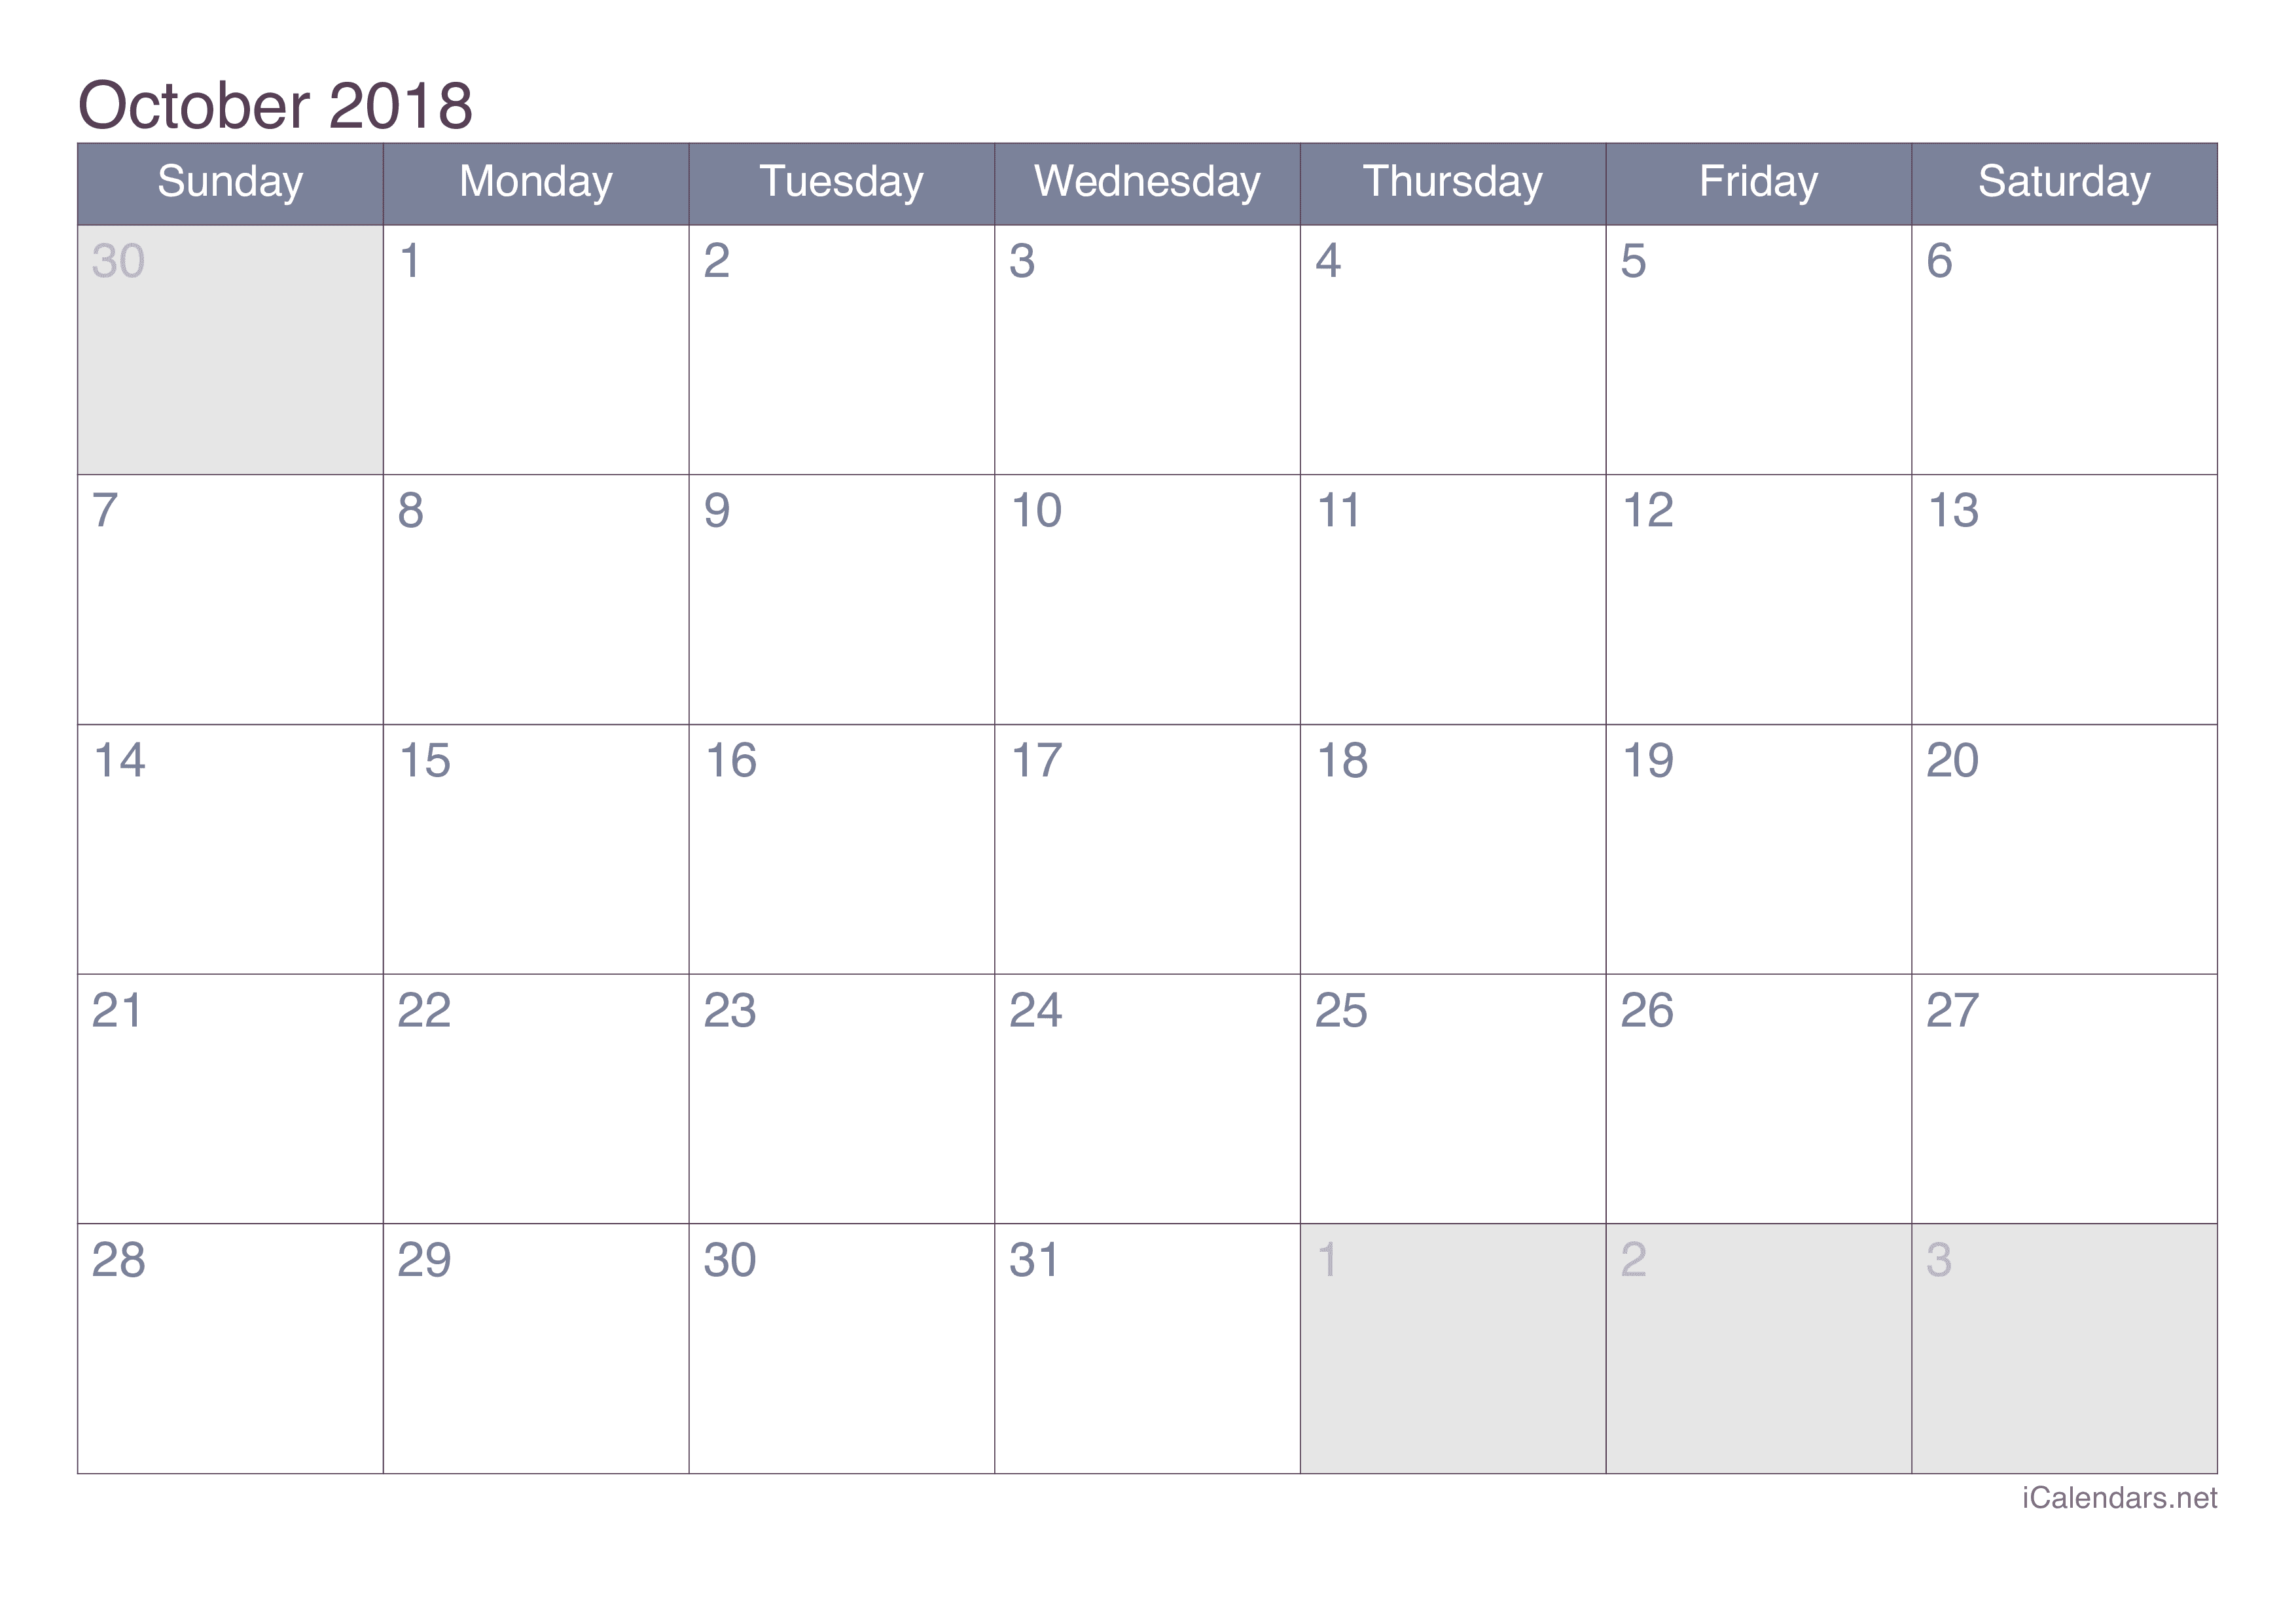 october-2018-printable-calendar-icalendars